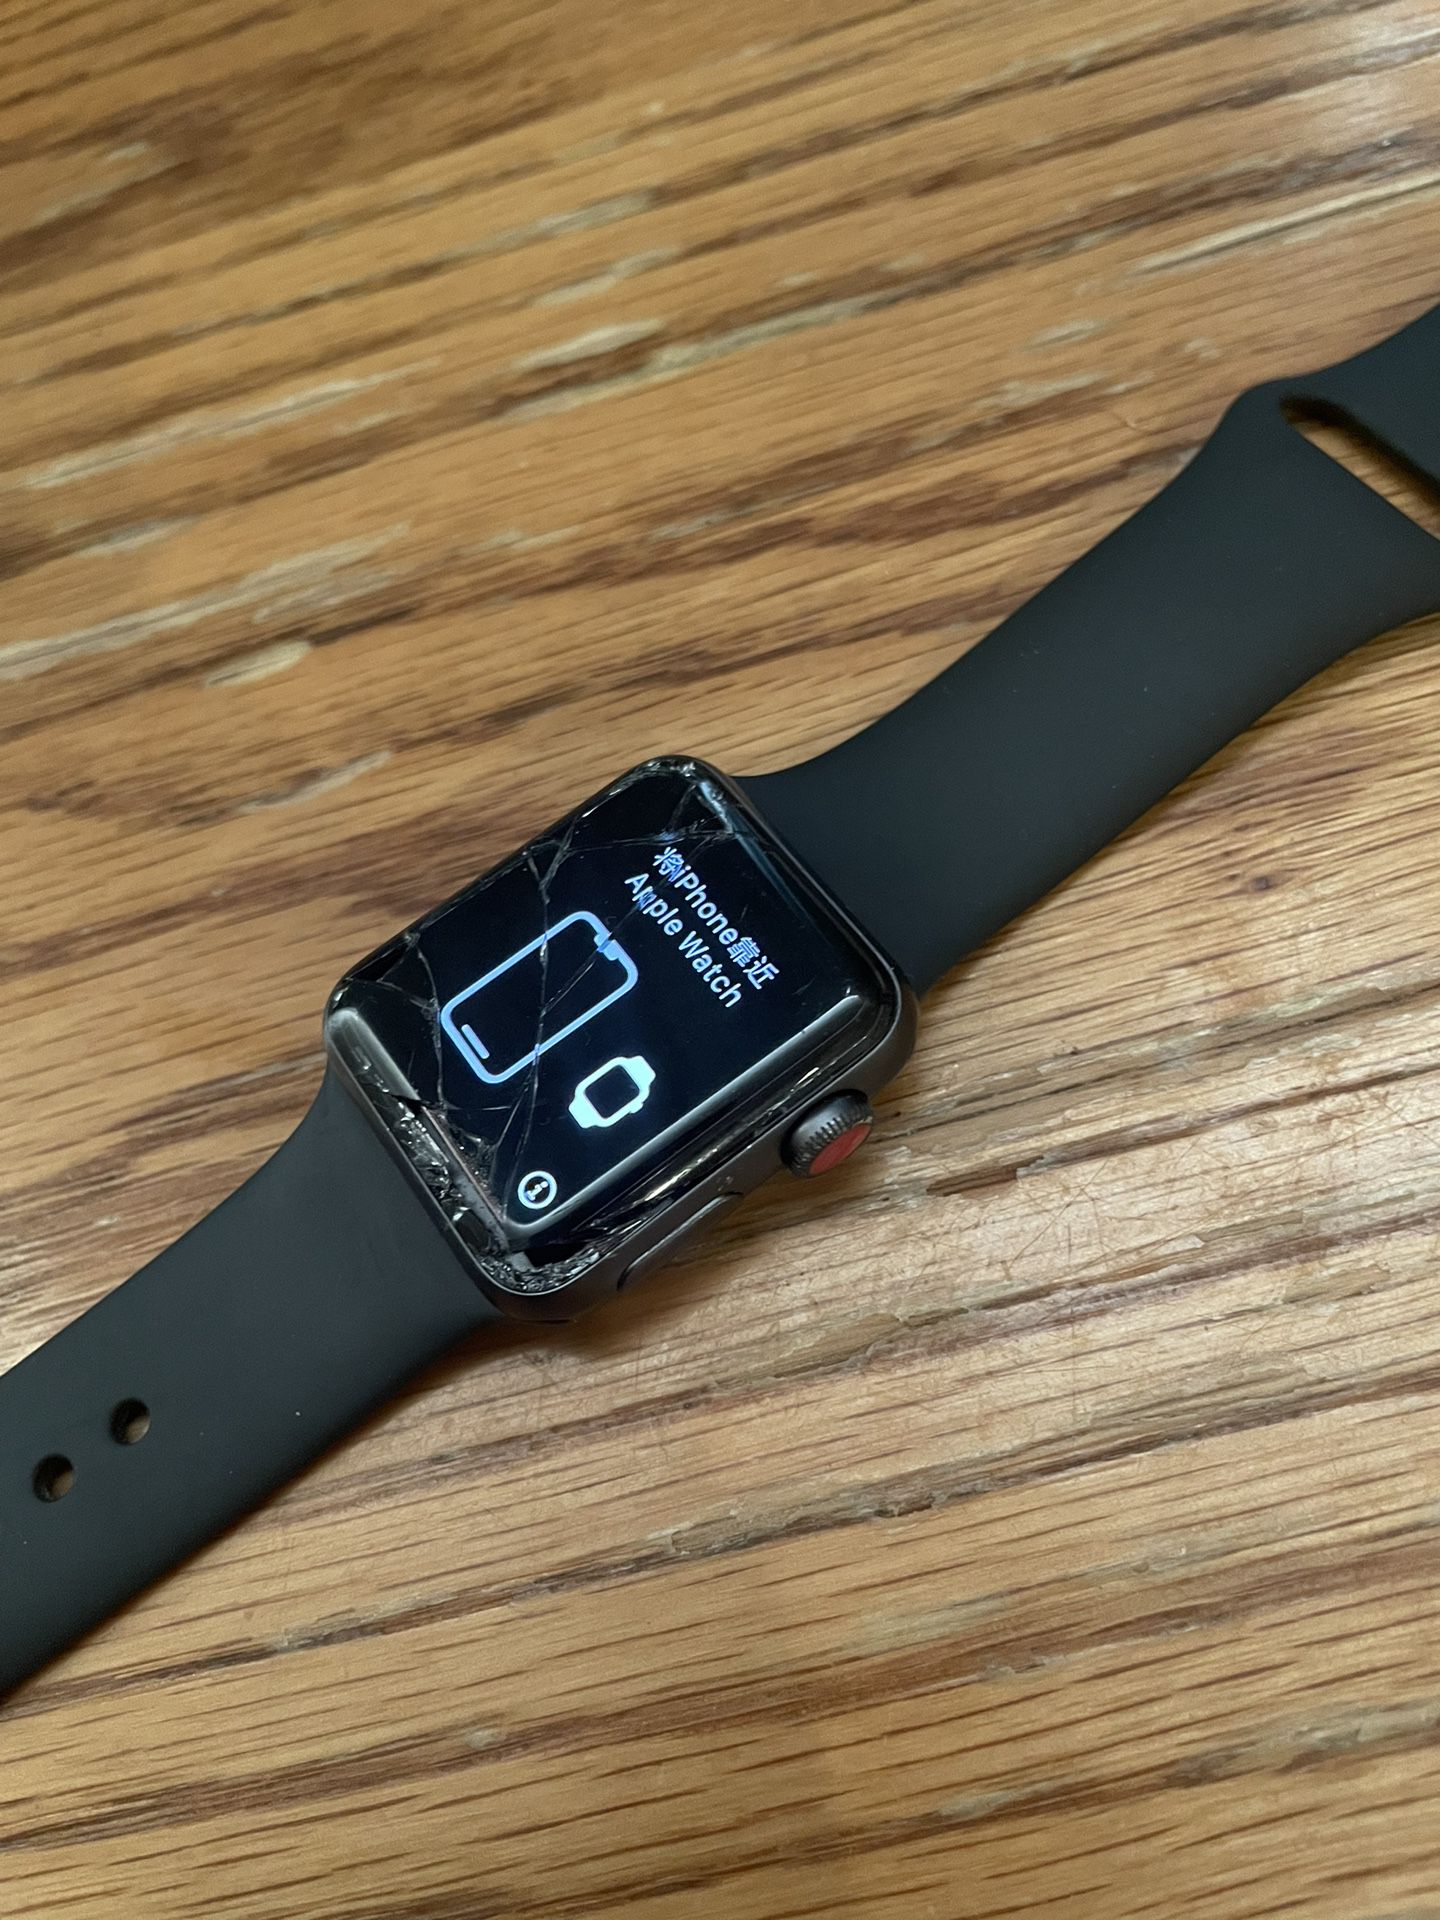 Apple Watch Series 3 Cellular + Data